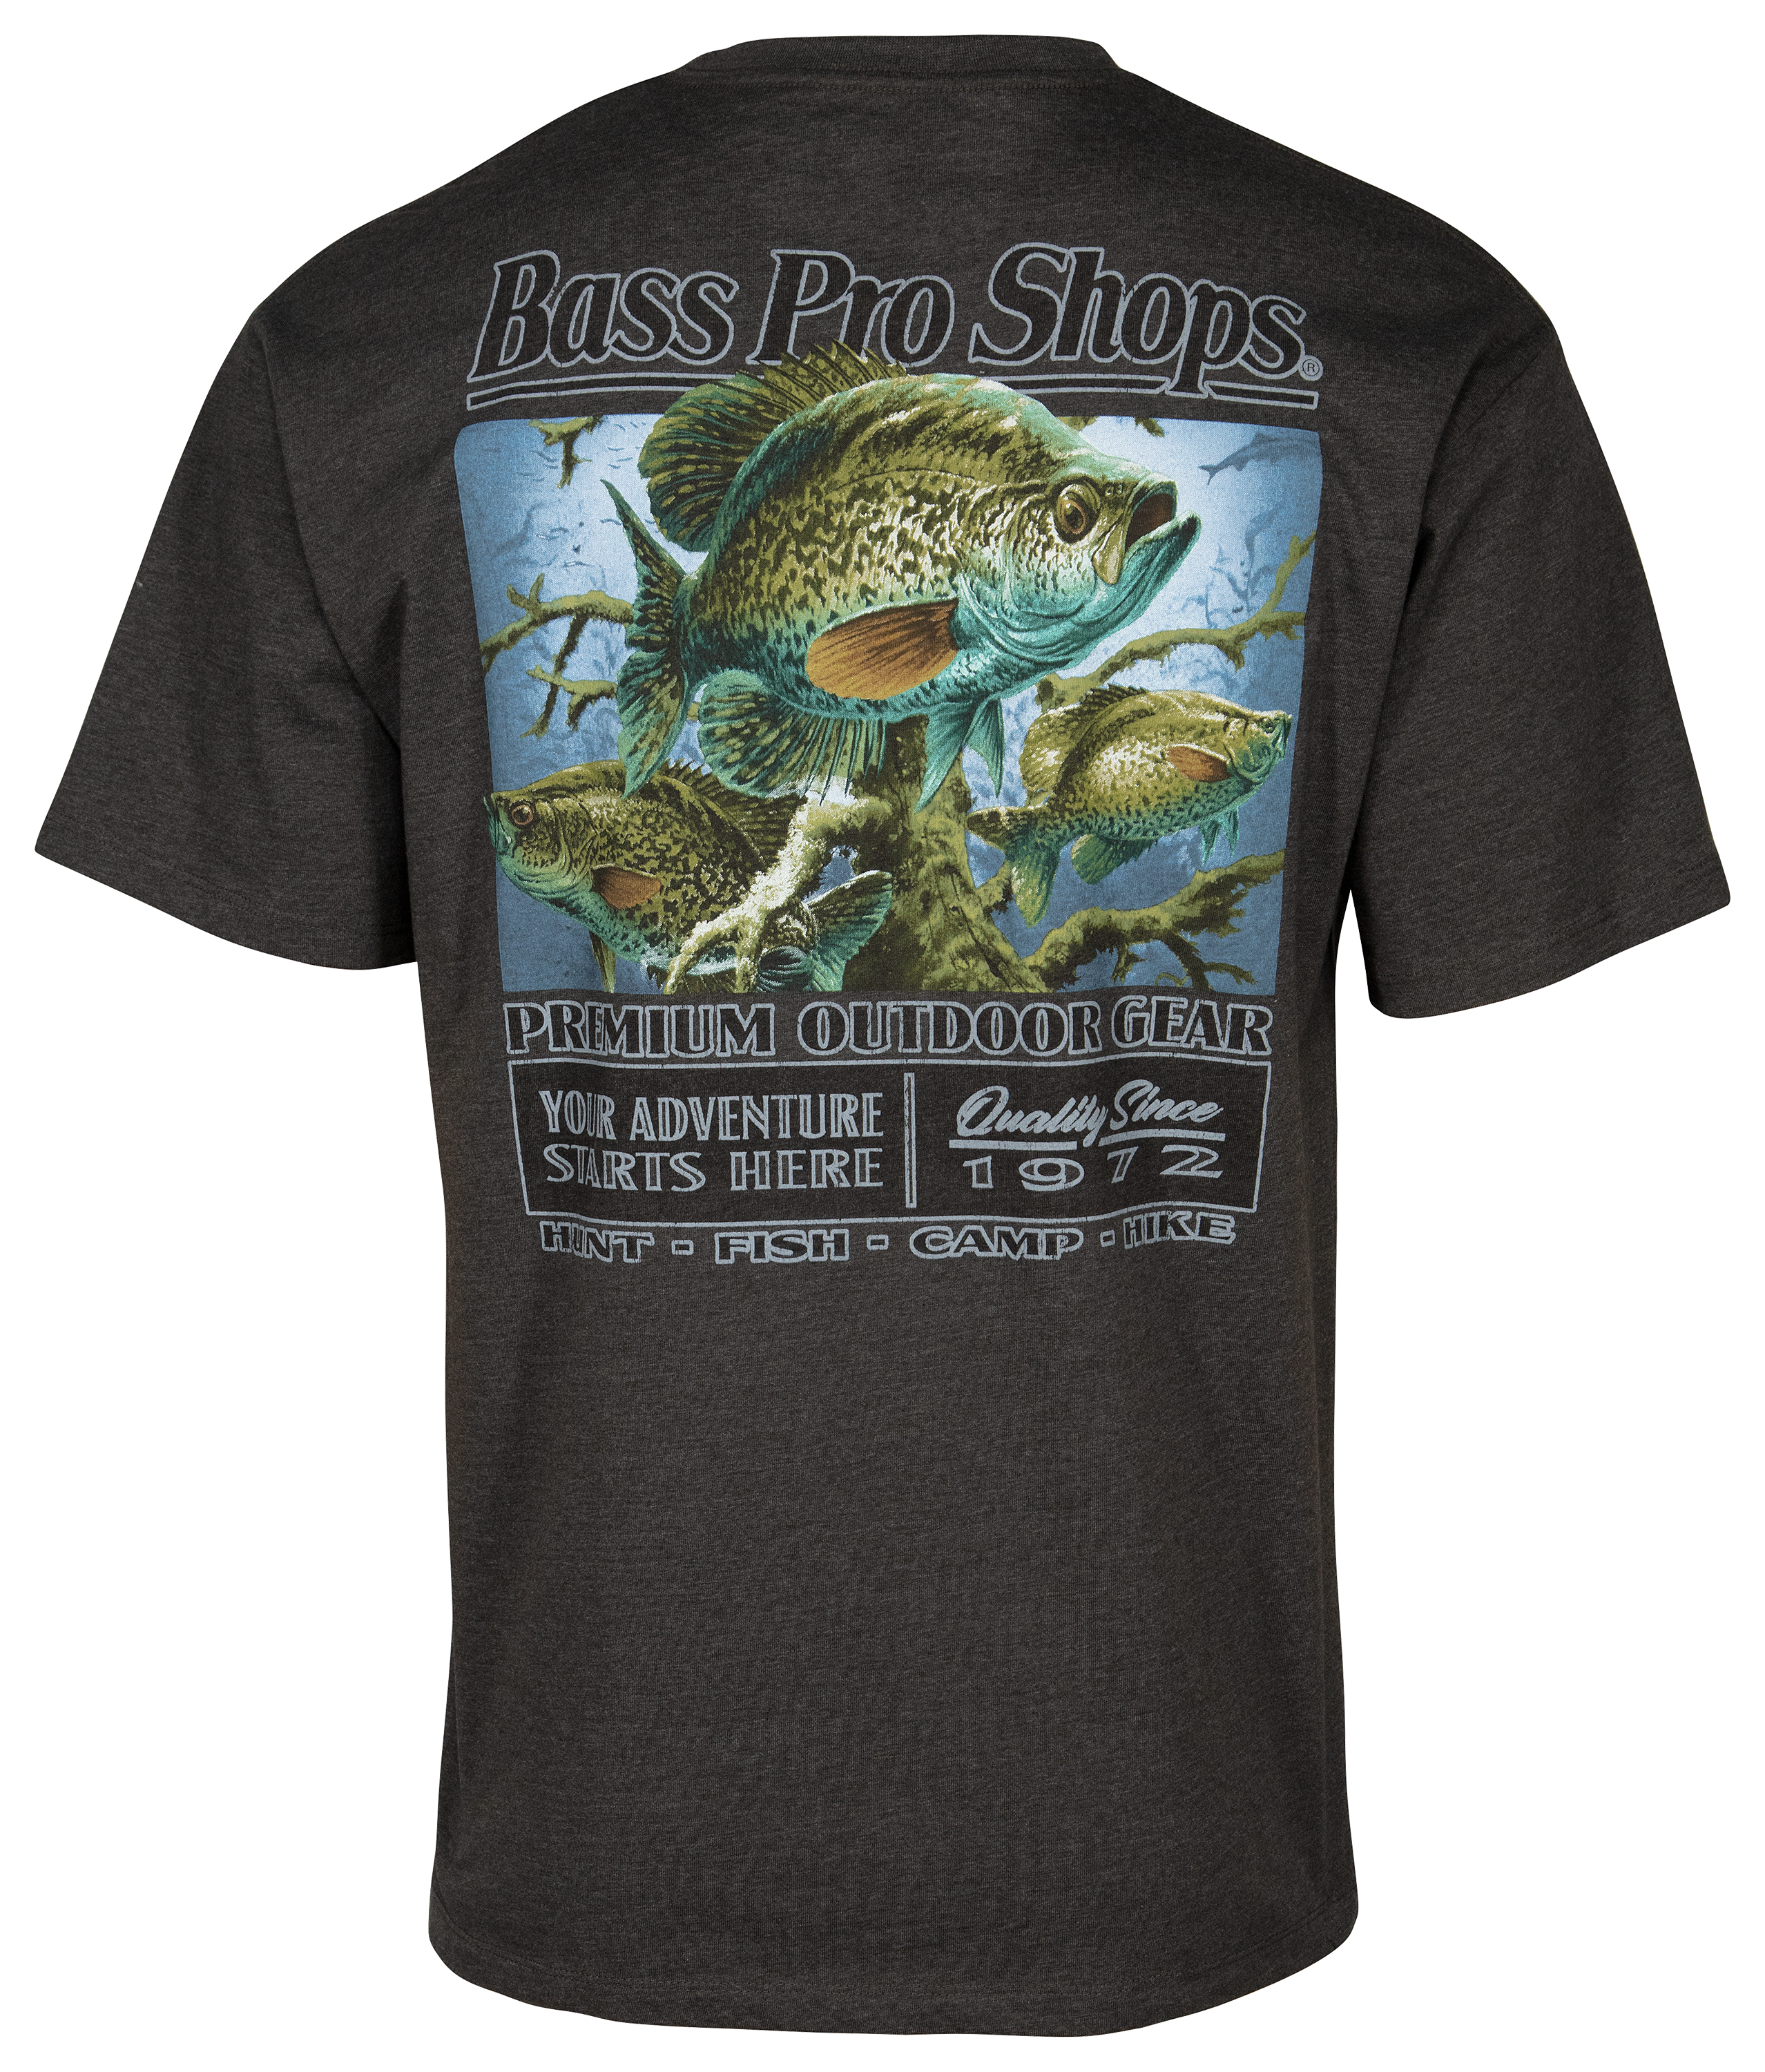 Bass Pro Shops Wildlife Series Short-Sleeve T-Shirt for Men